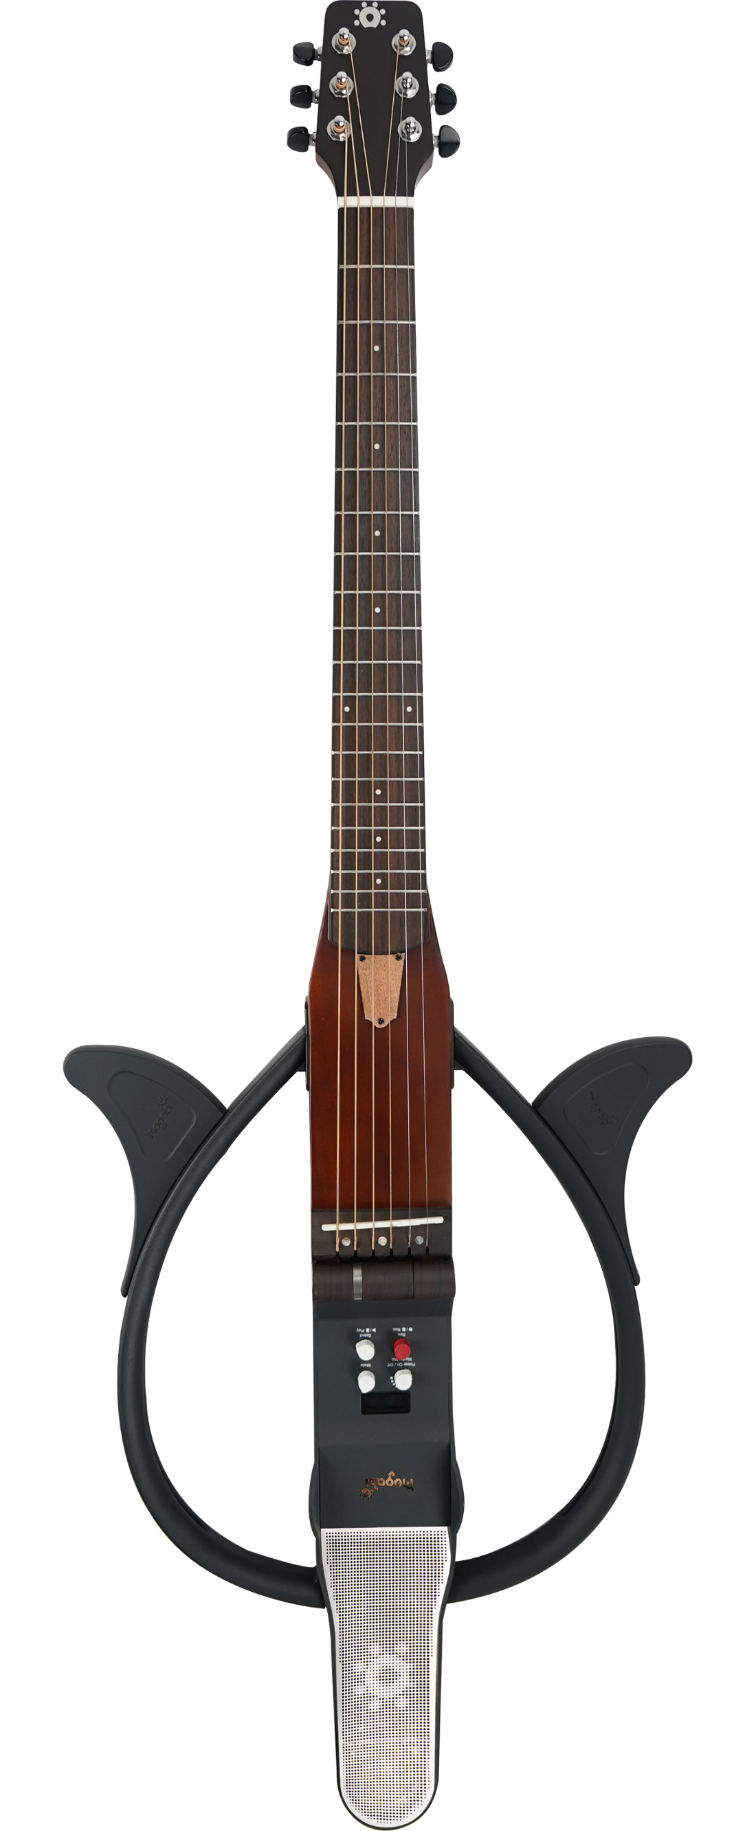 Mogabi guitar 200 black